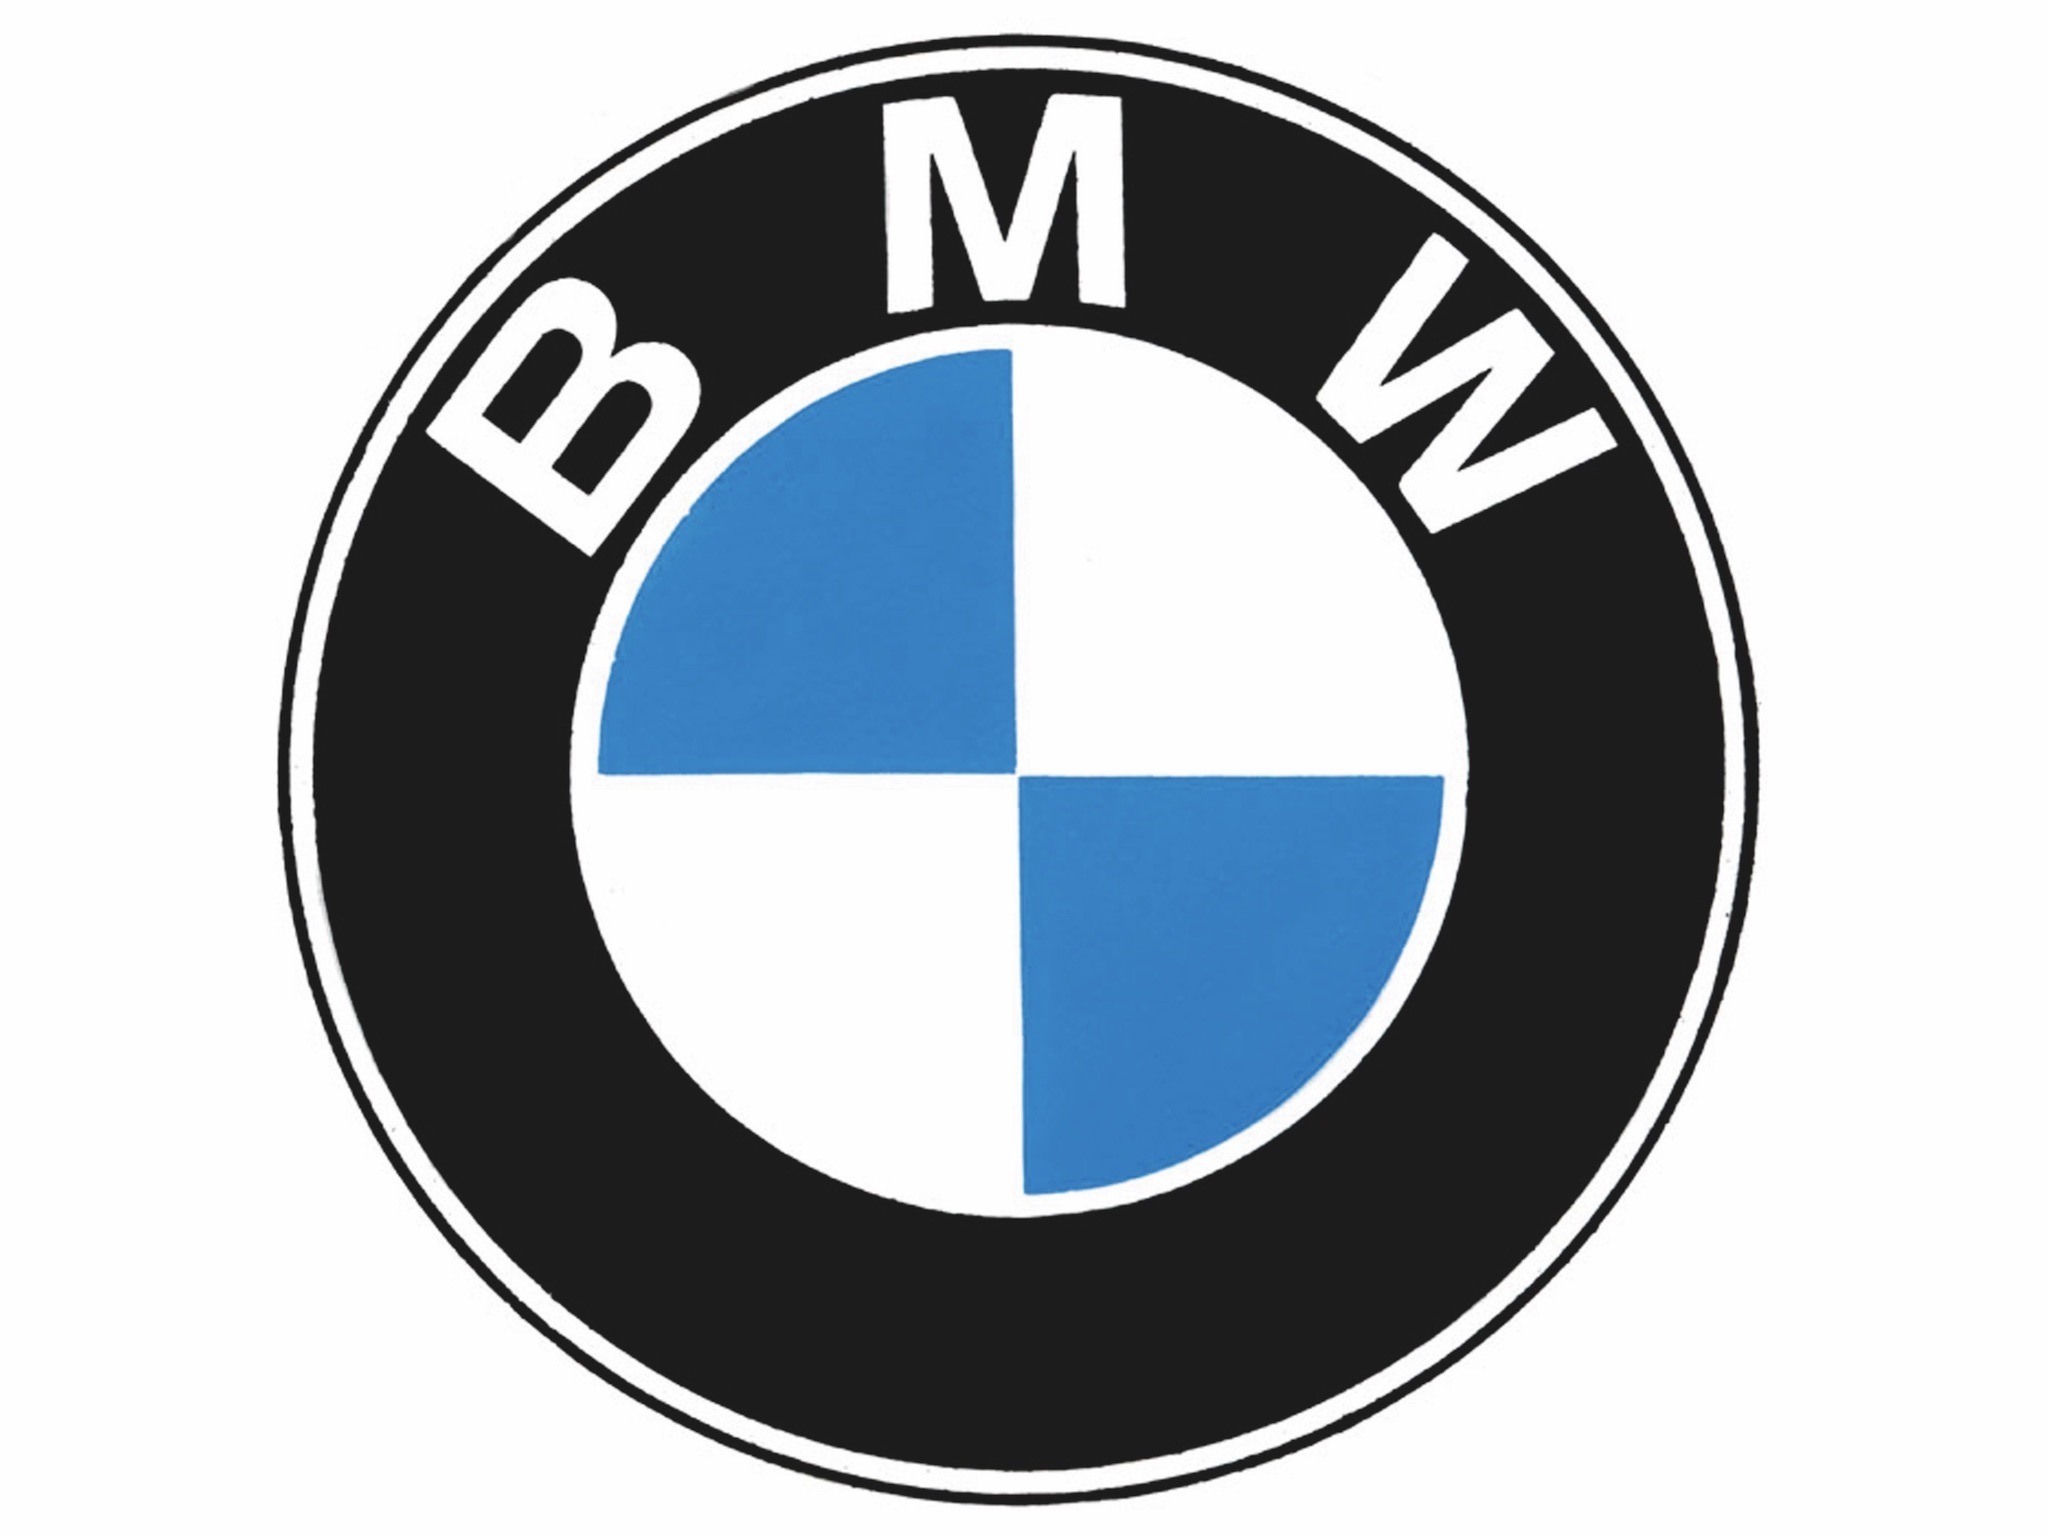 Bmwのロゴはプロペラではない とも言い切れない 7枚目の写真 画像 レスポンス Response Jp